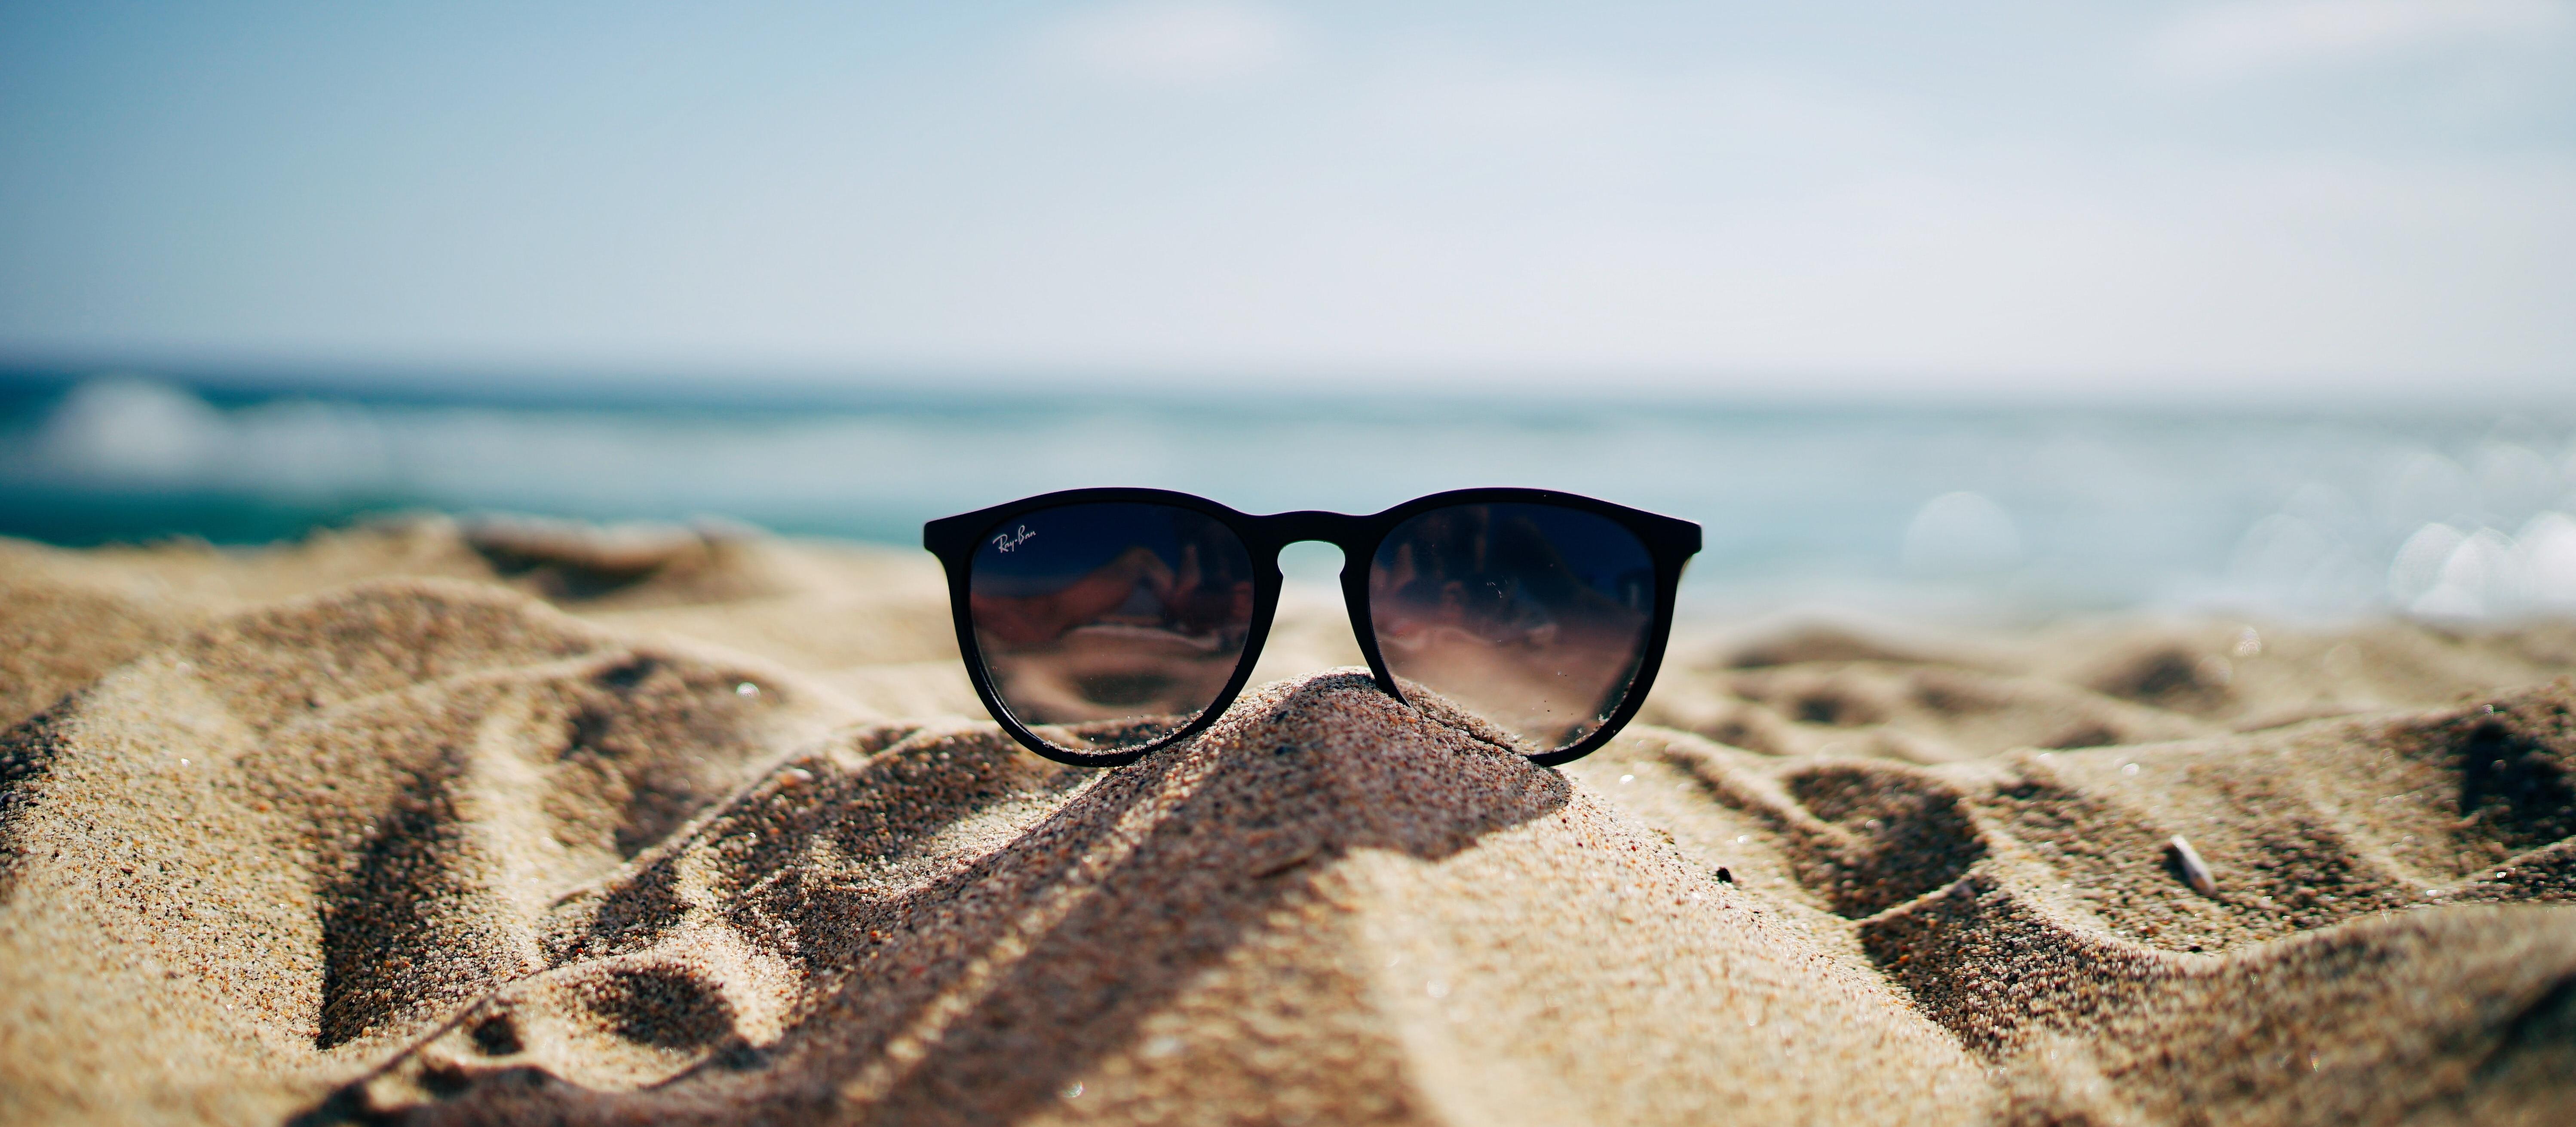 Summer, sand, beach, sunglasses [image: Ethan Robertson Unsplash]